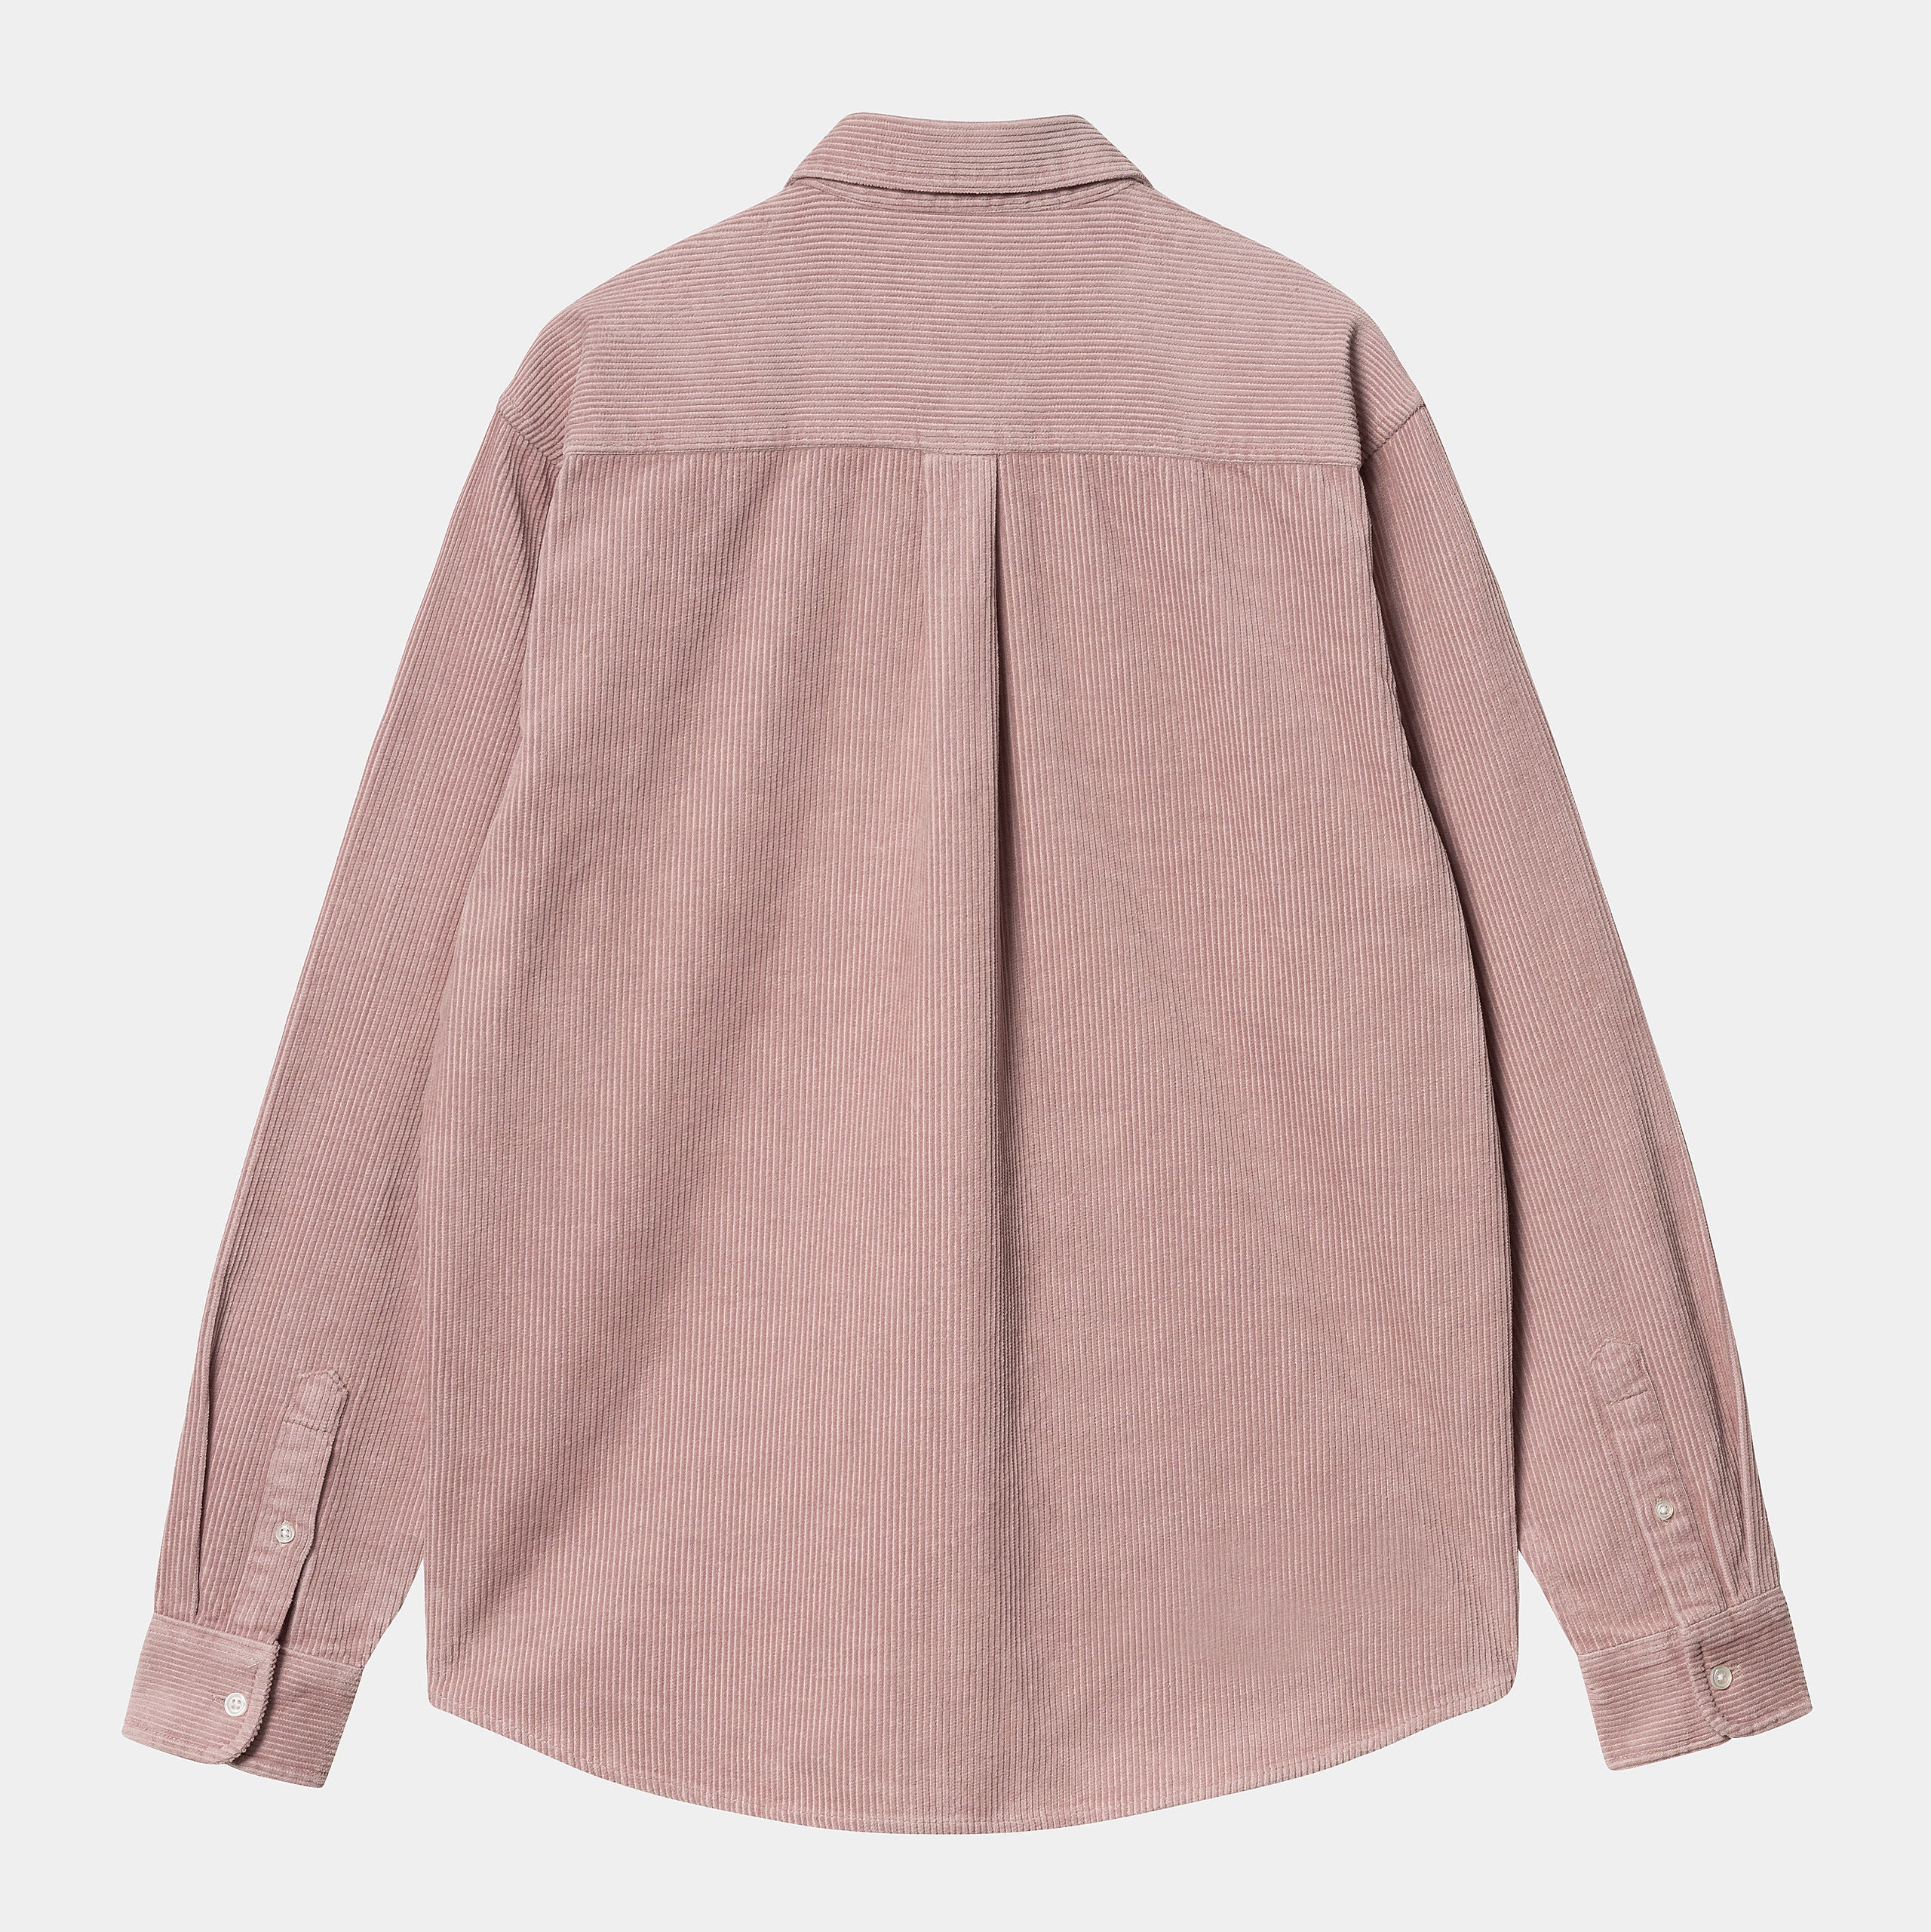 Madison Cord Glassy Pink / Black Shirt- Back view